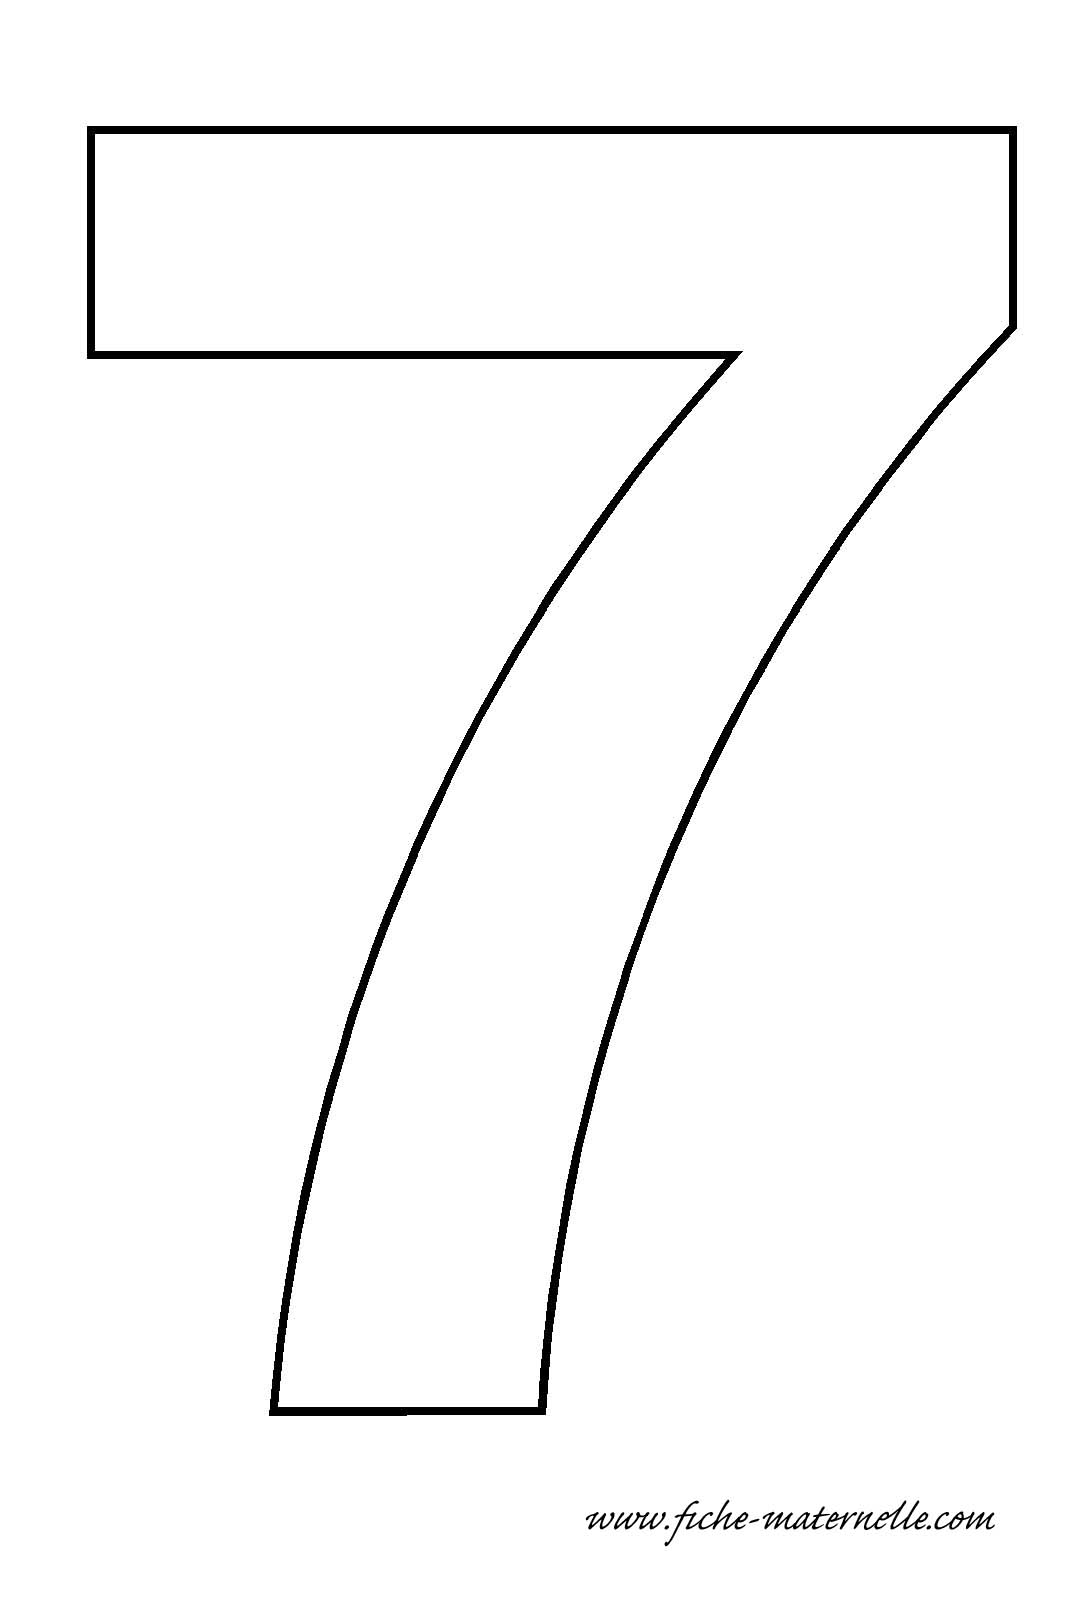 7 Best Images of Large Printable Number 7 Large Stencil Number 7